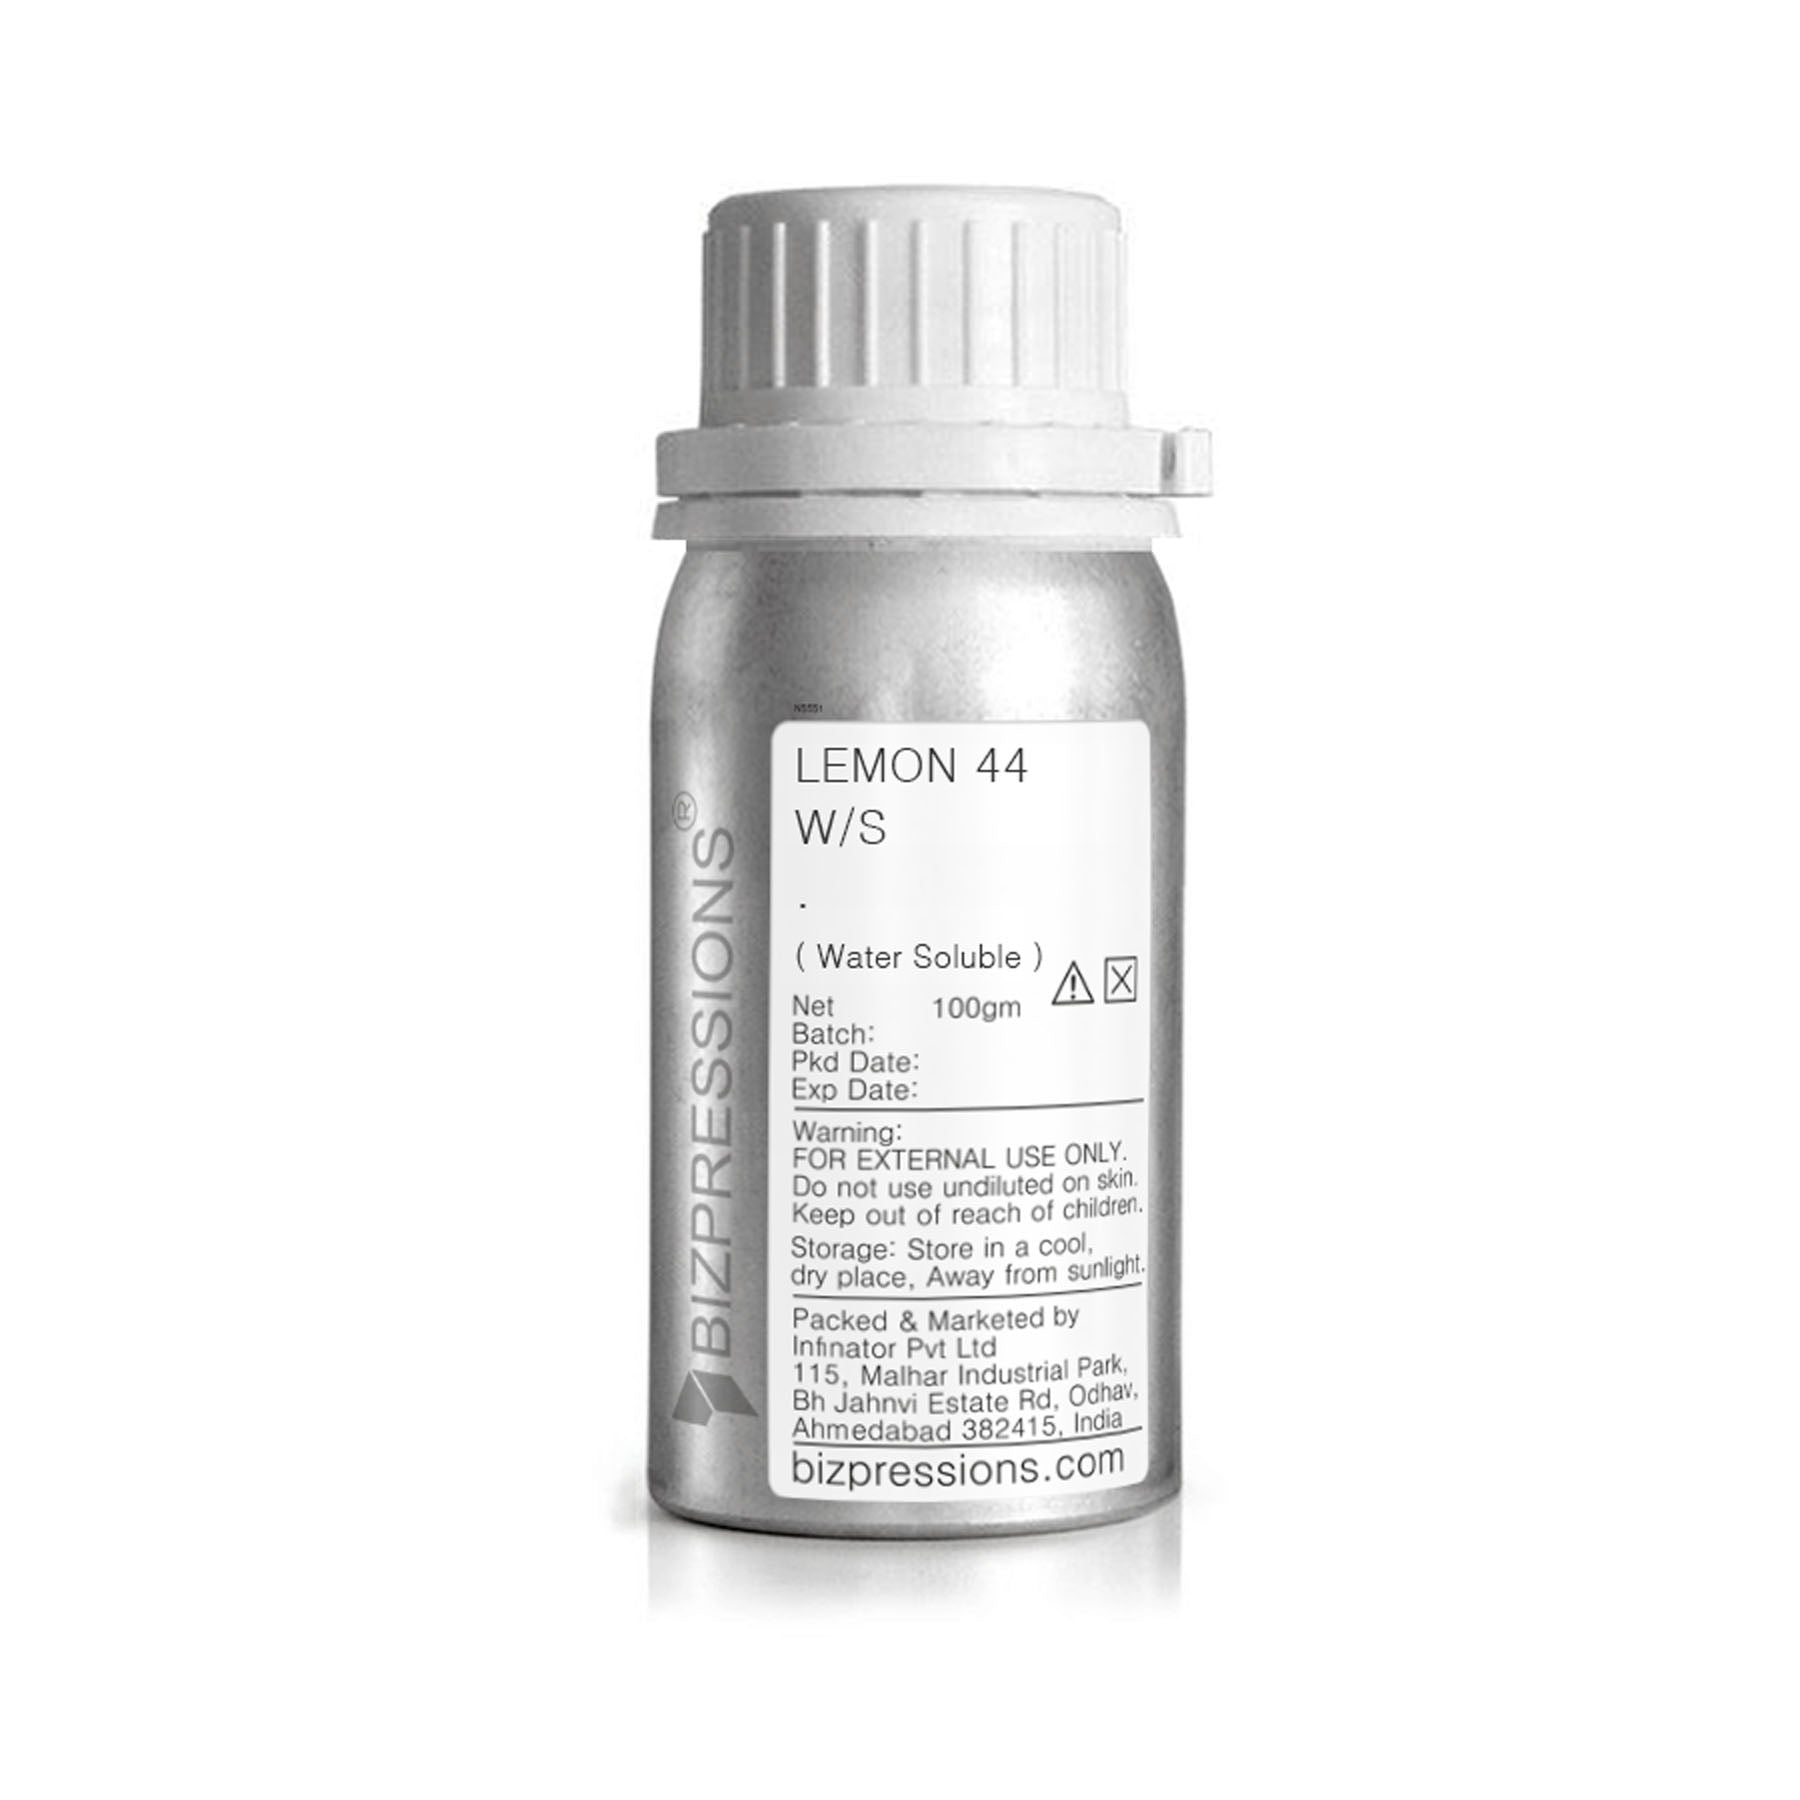 LEMON 44 W/S - Fragrance ( Water Soluble ) - 100 gm